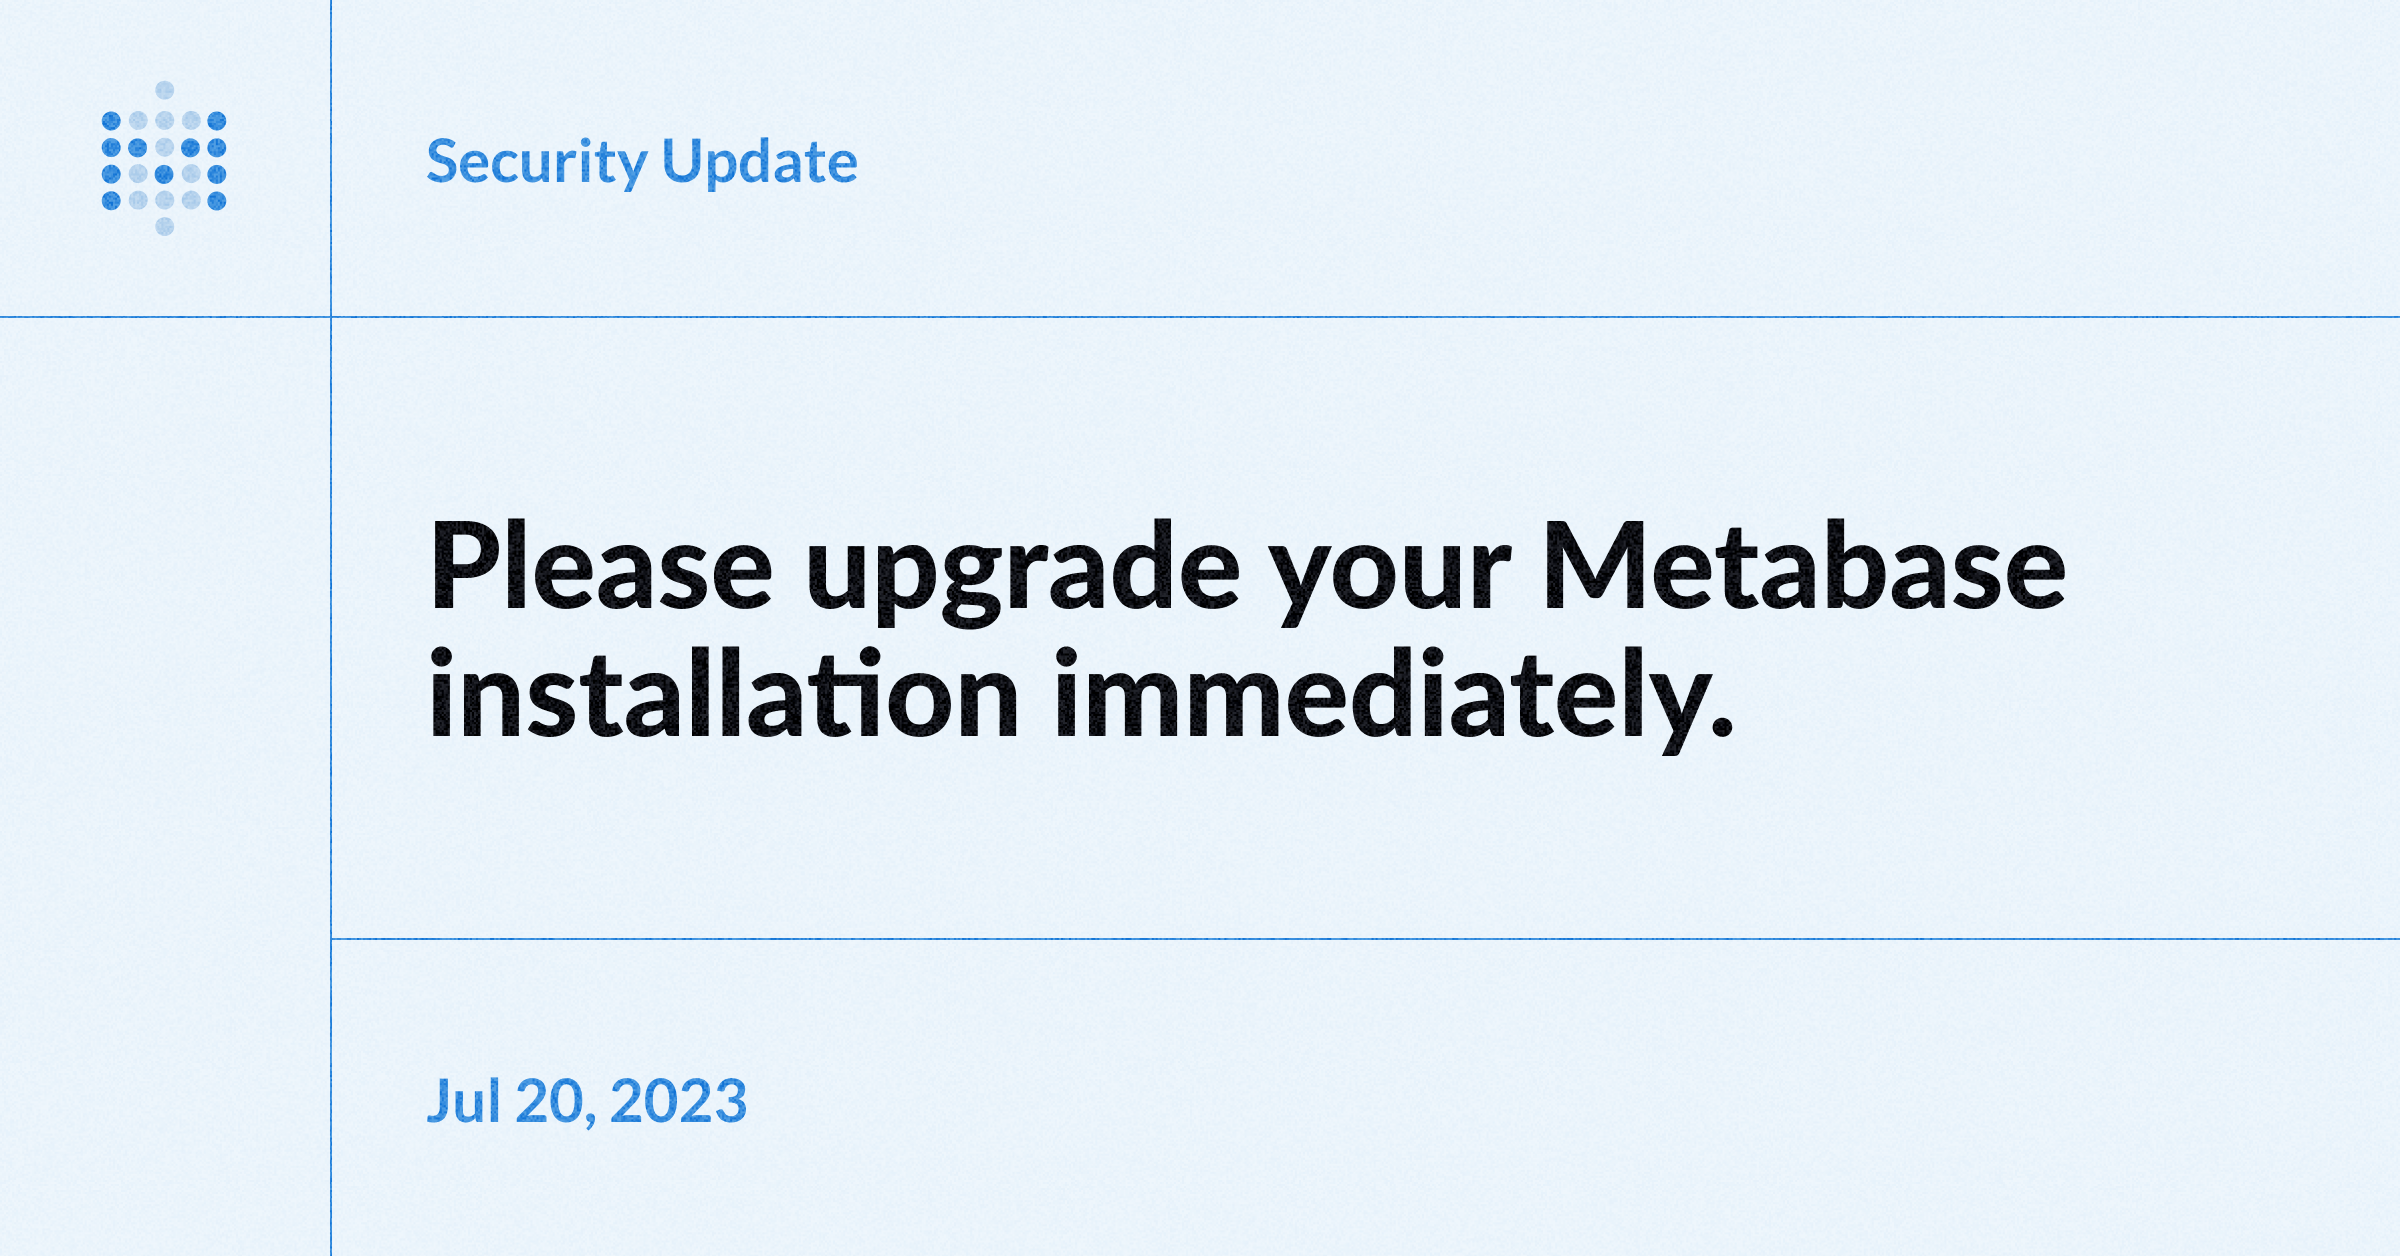 Please upgrade your Metabase immediately Image